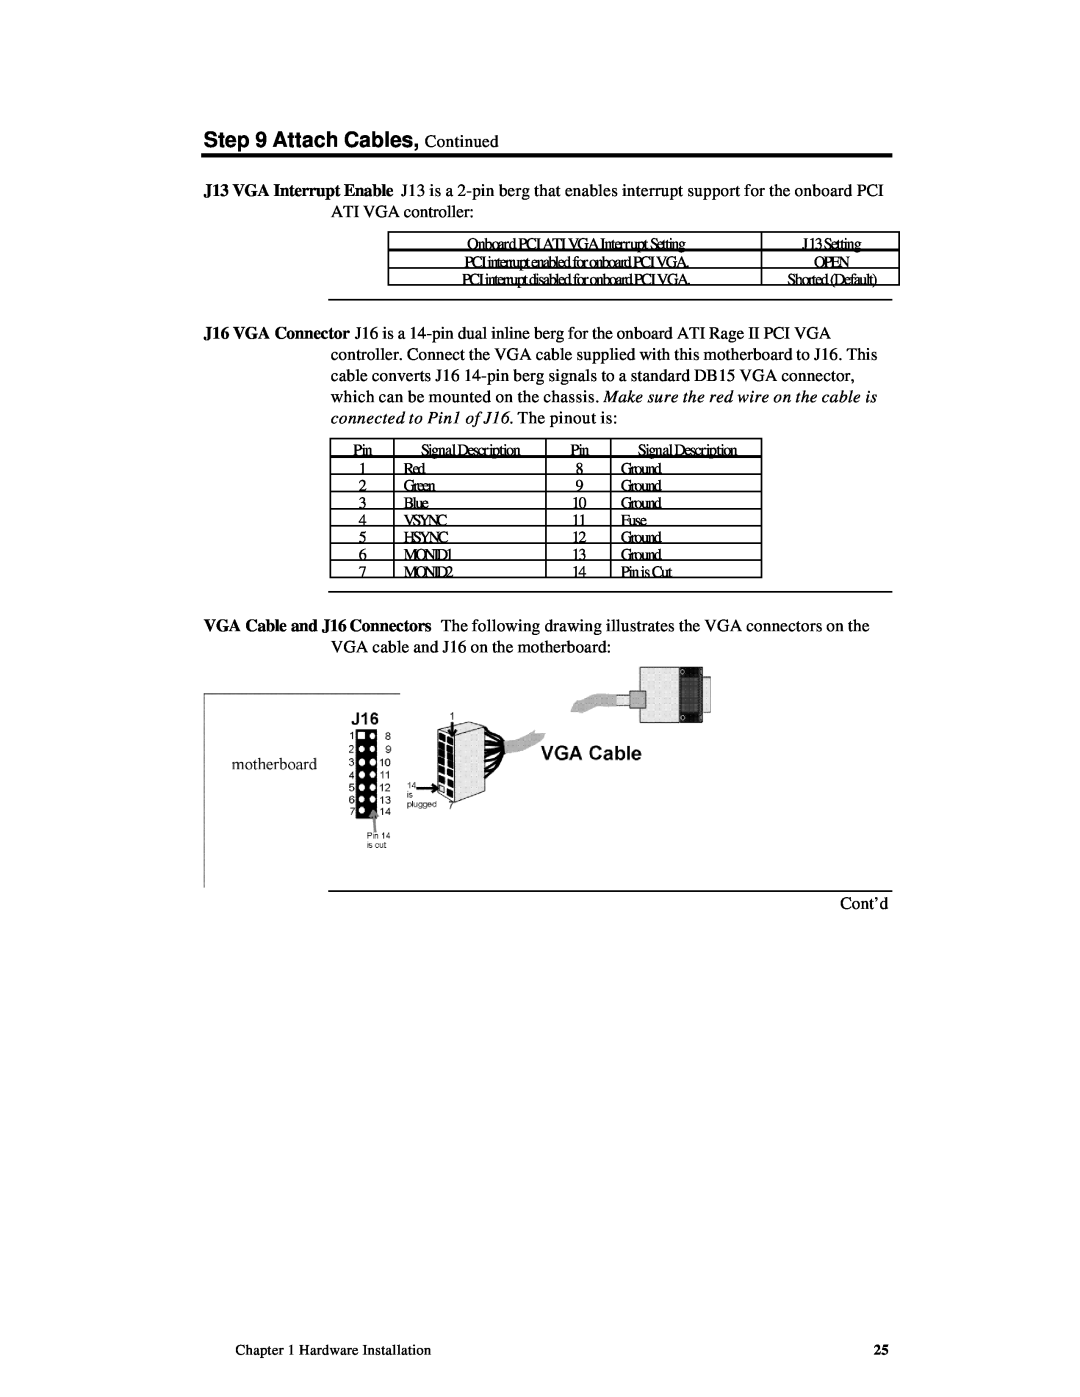 American Megatrends MAN-758 manual Attach Cables, Continued, SignalDescription 